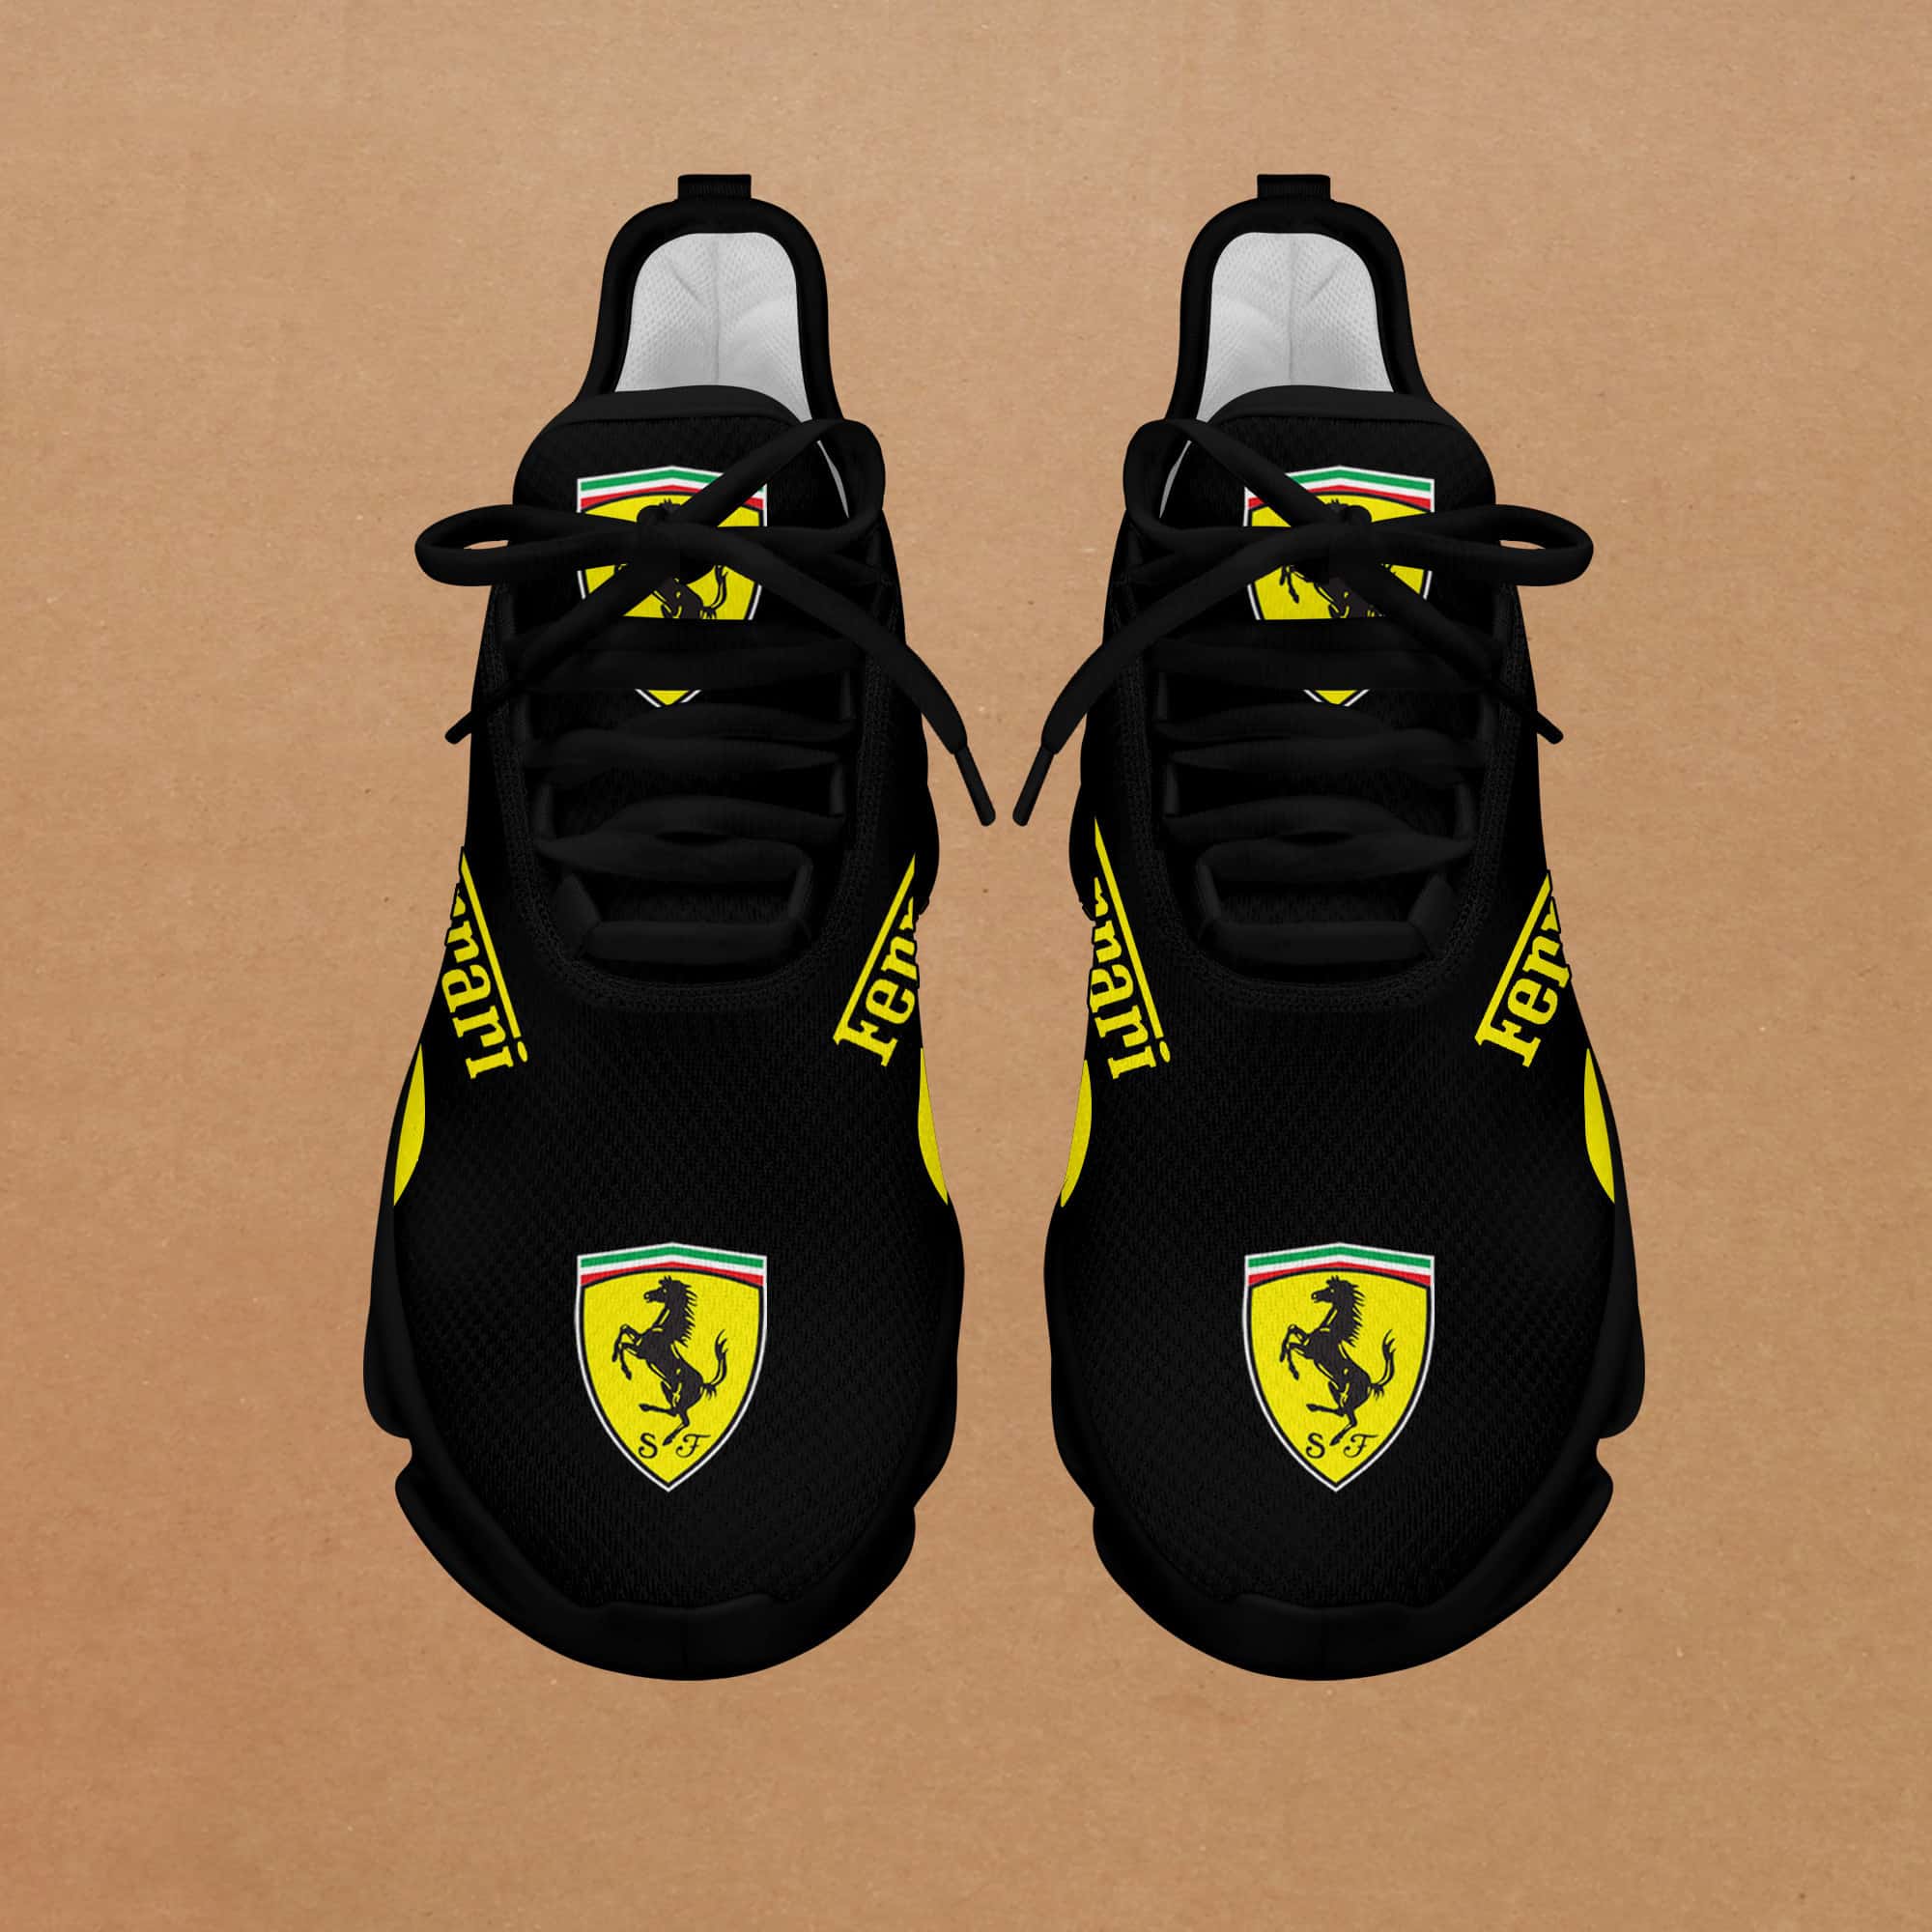 Ferrari Sneaker Running Shoes Max Soul Shoes Sneakers Ver 6 4